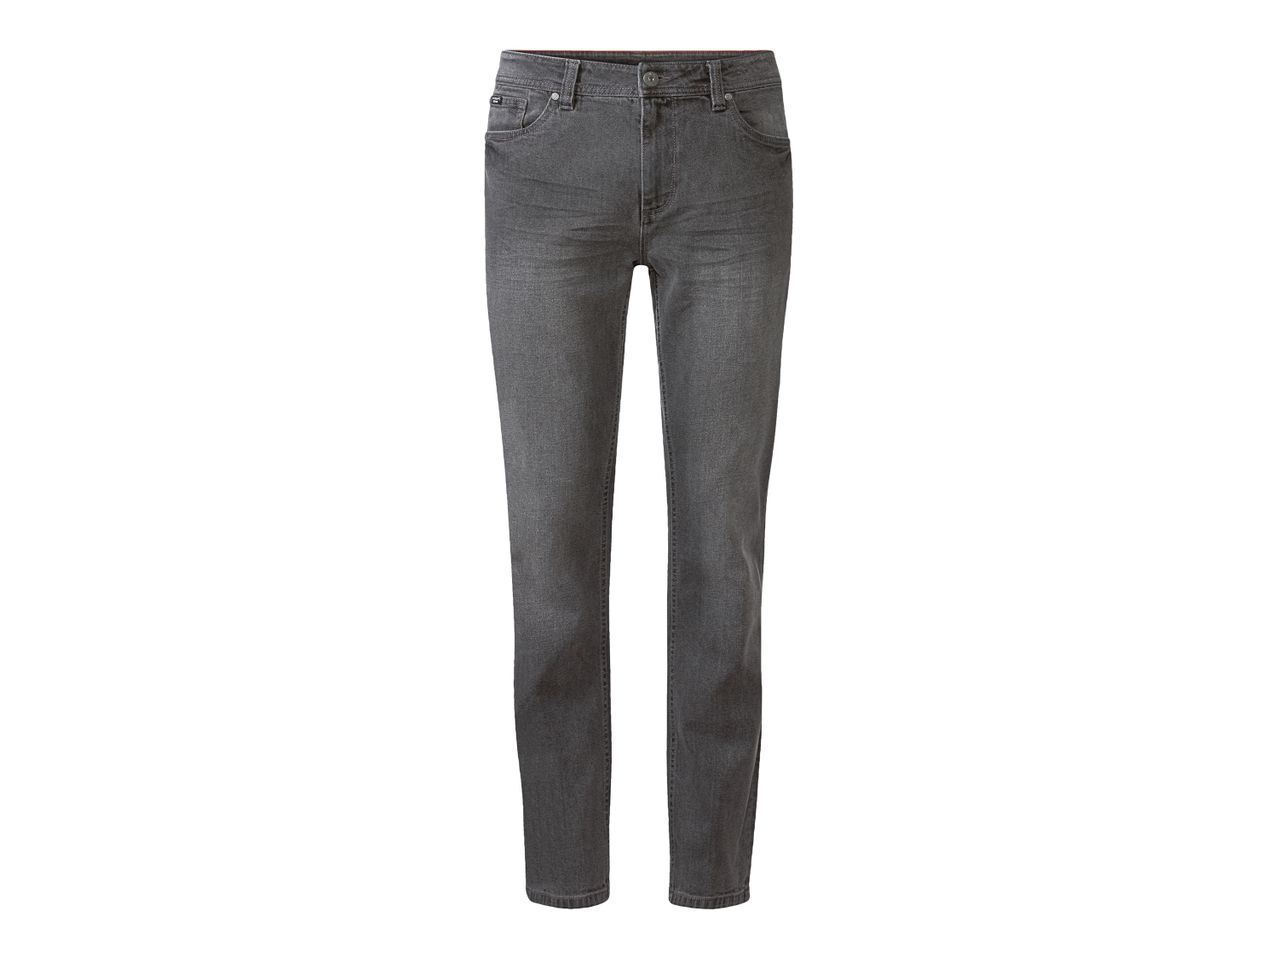 Jeans Slim Fit da uomo , prezzo 14.99 EUR 
Jeans Slim Fit da uomo Misure: 46-54 ...